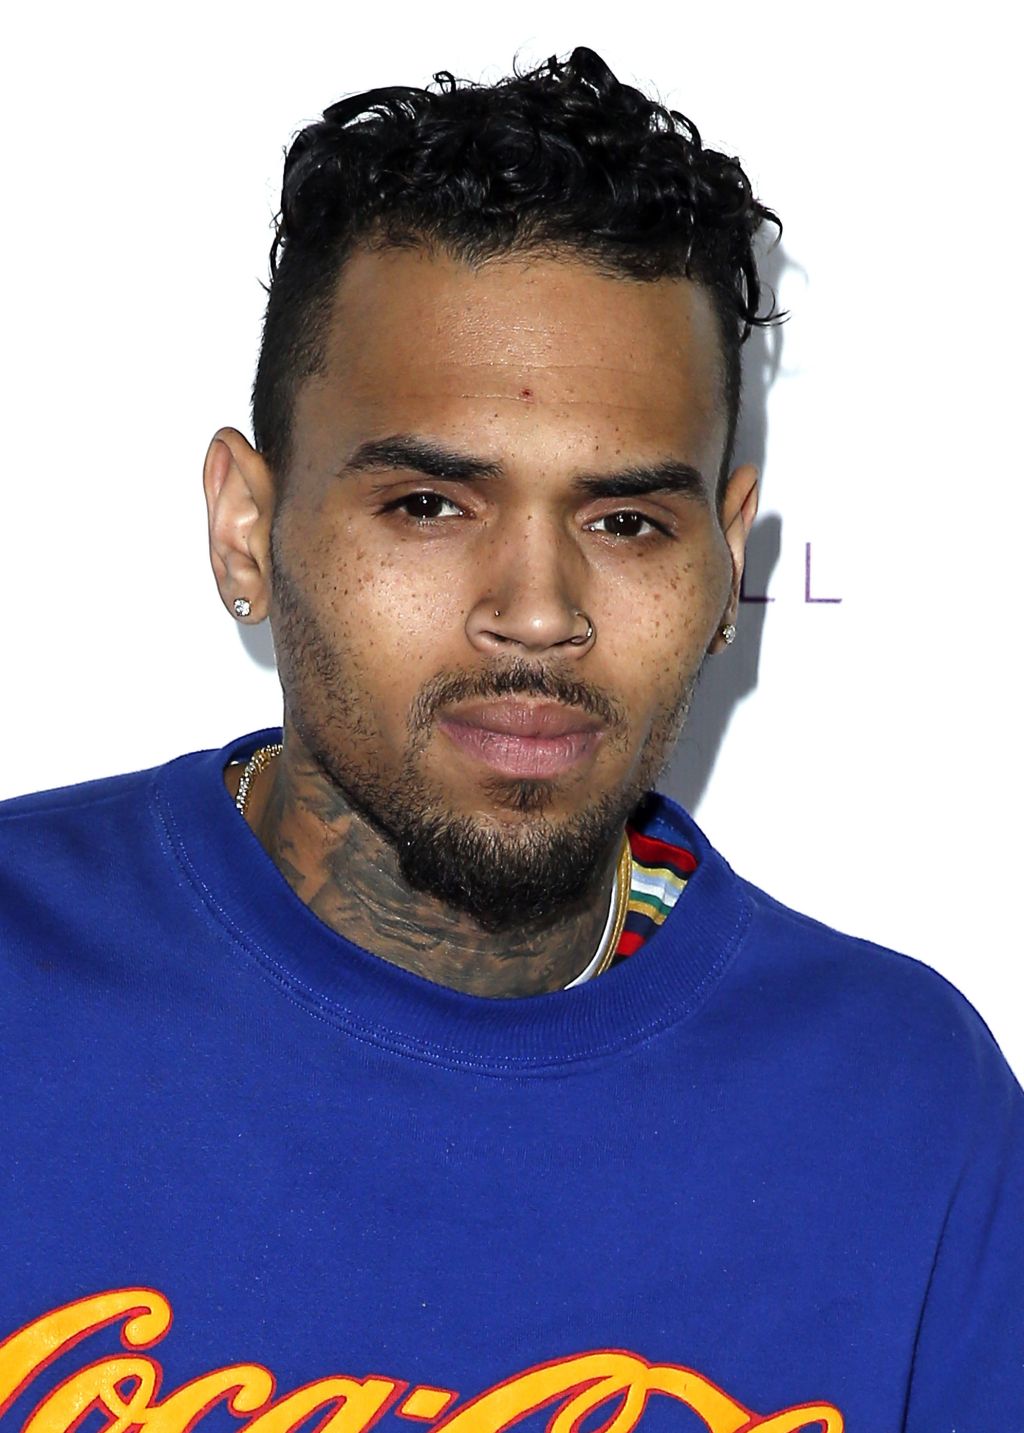 Chris Brown celebrates his birthday at Drais nightclub